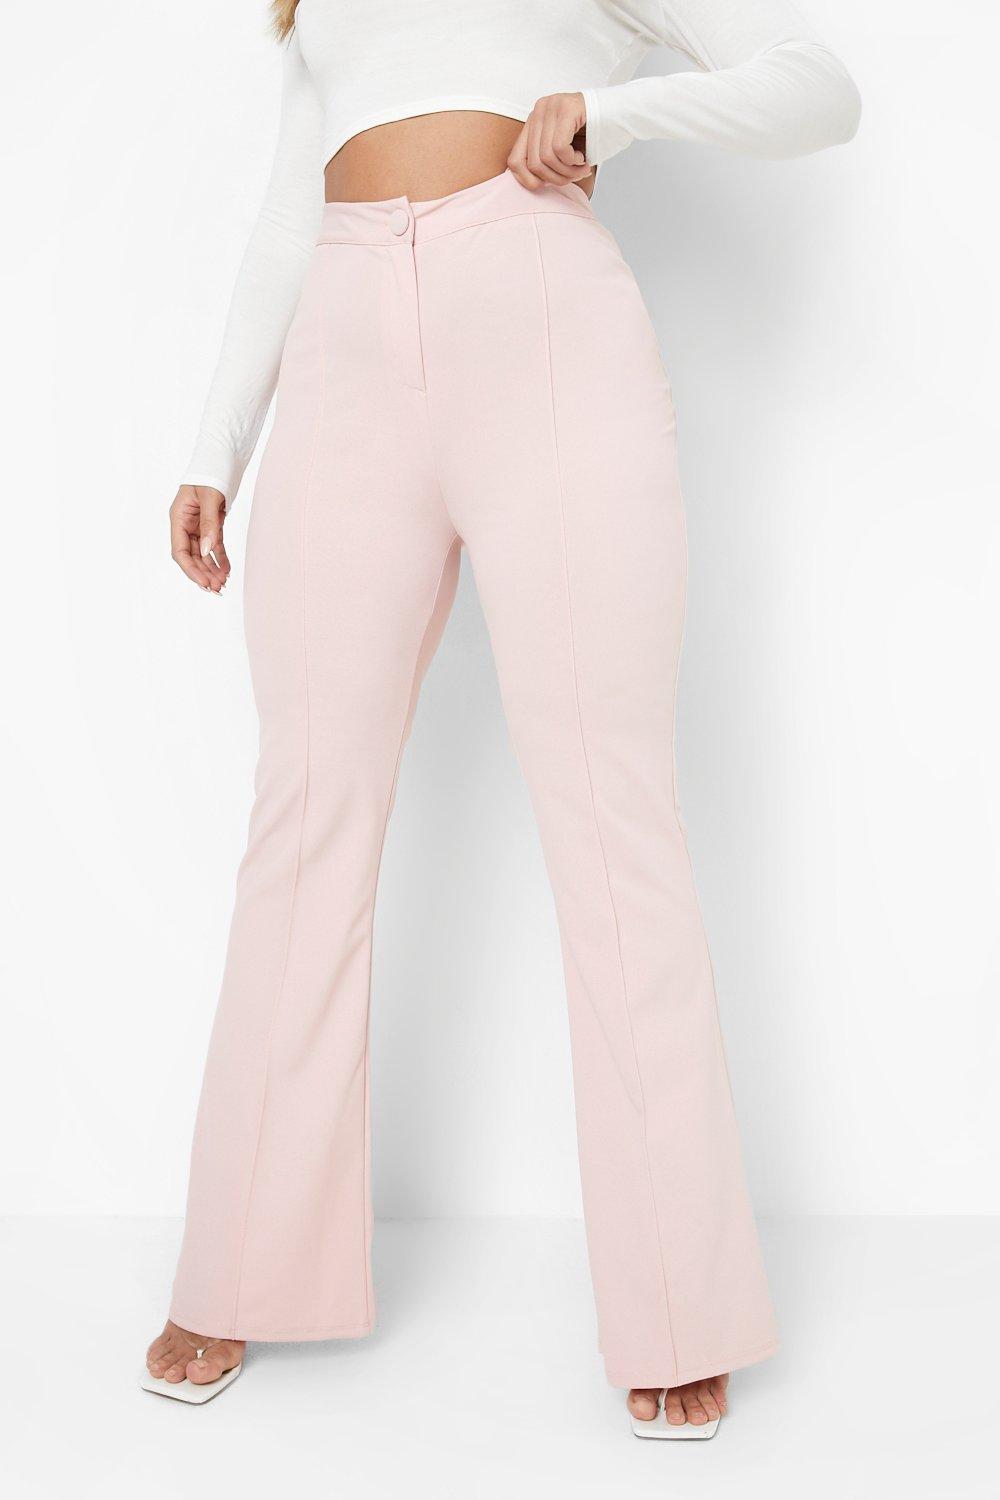 Light Pink Flare Pants